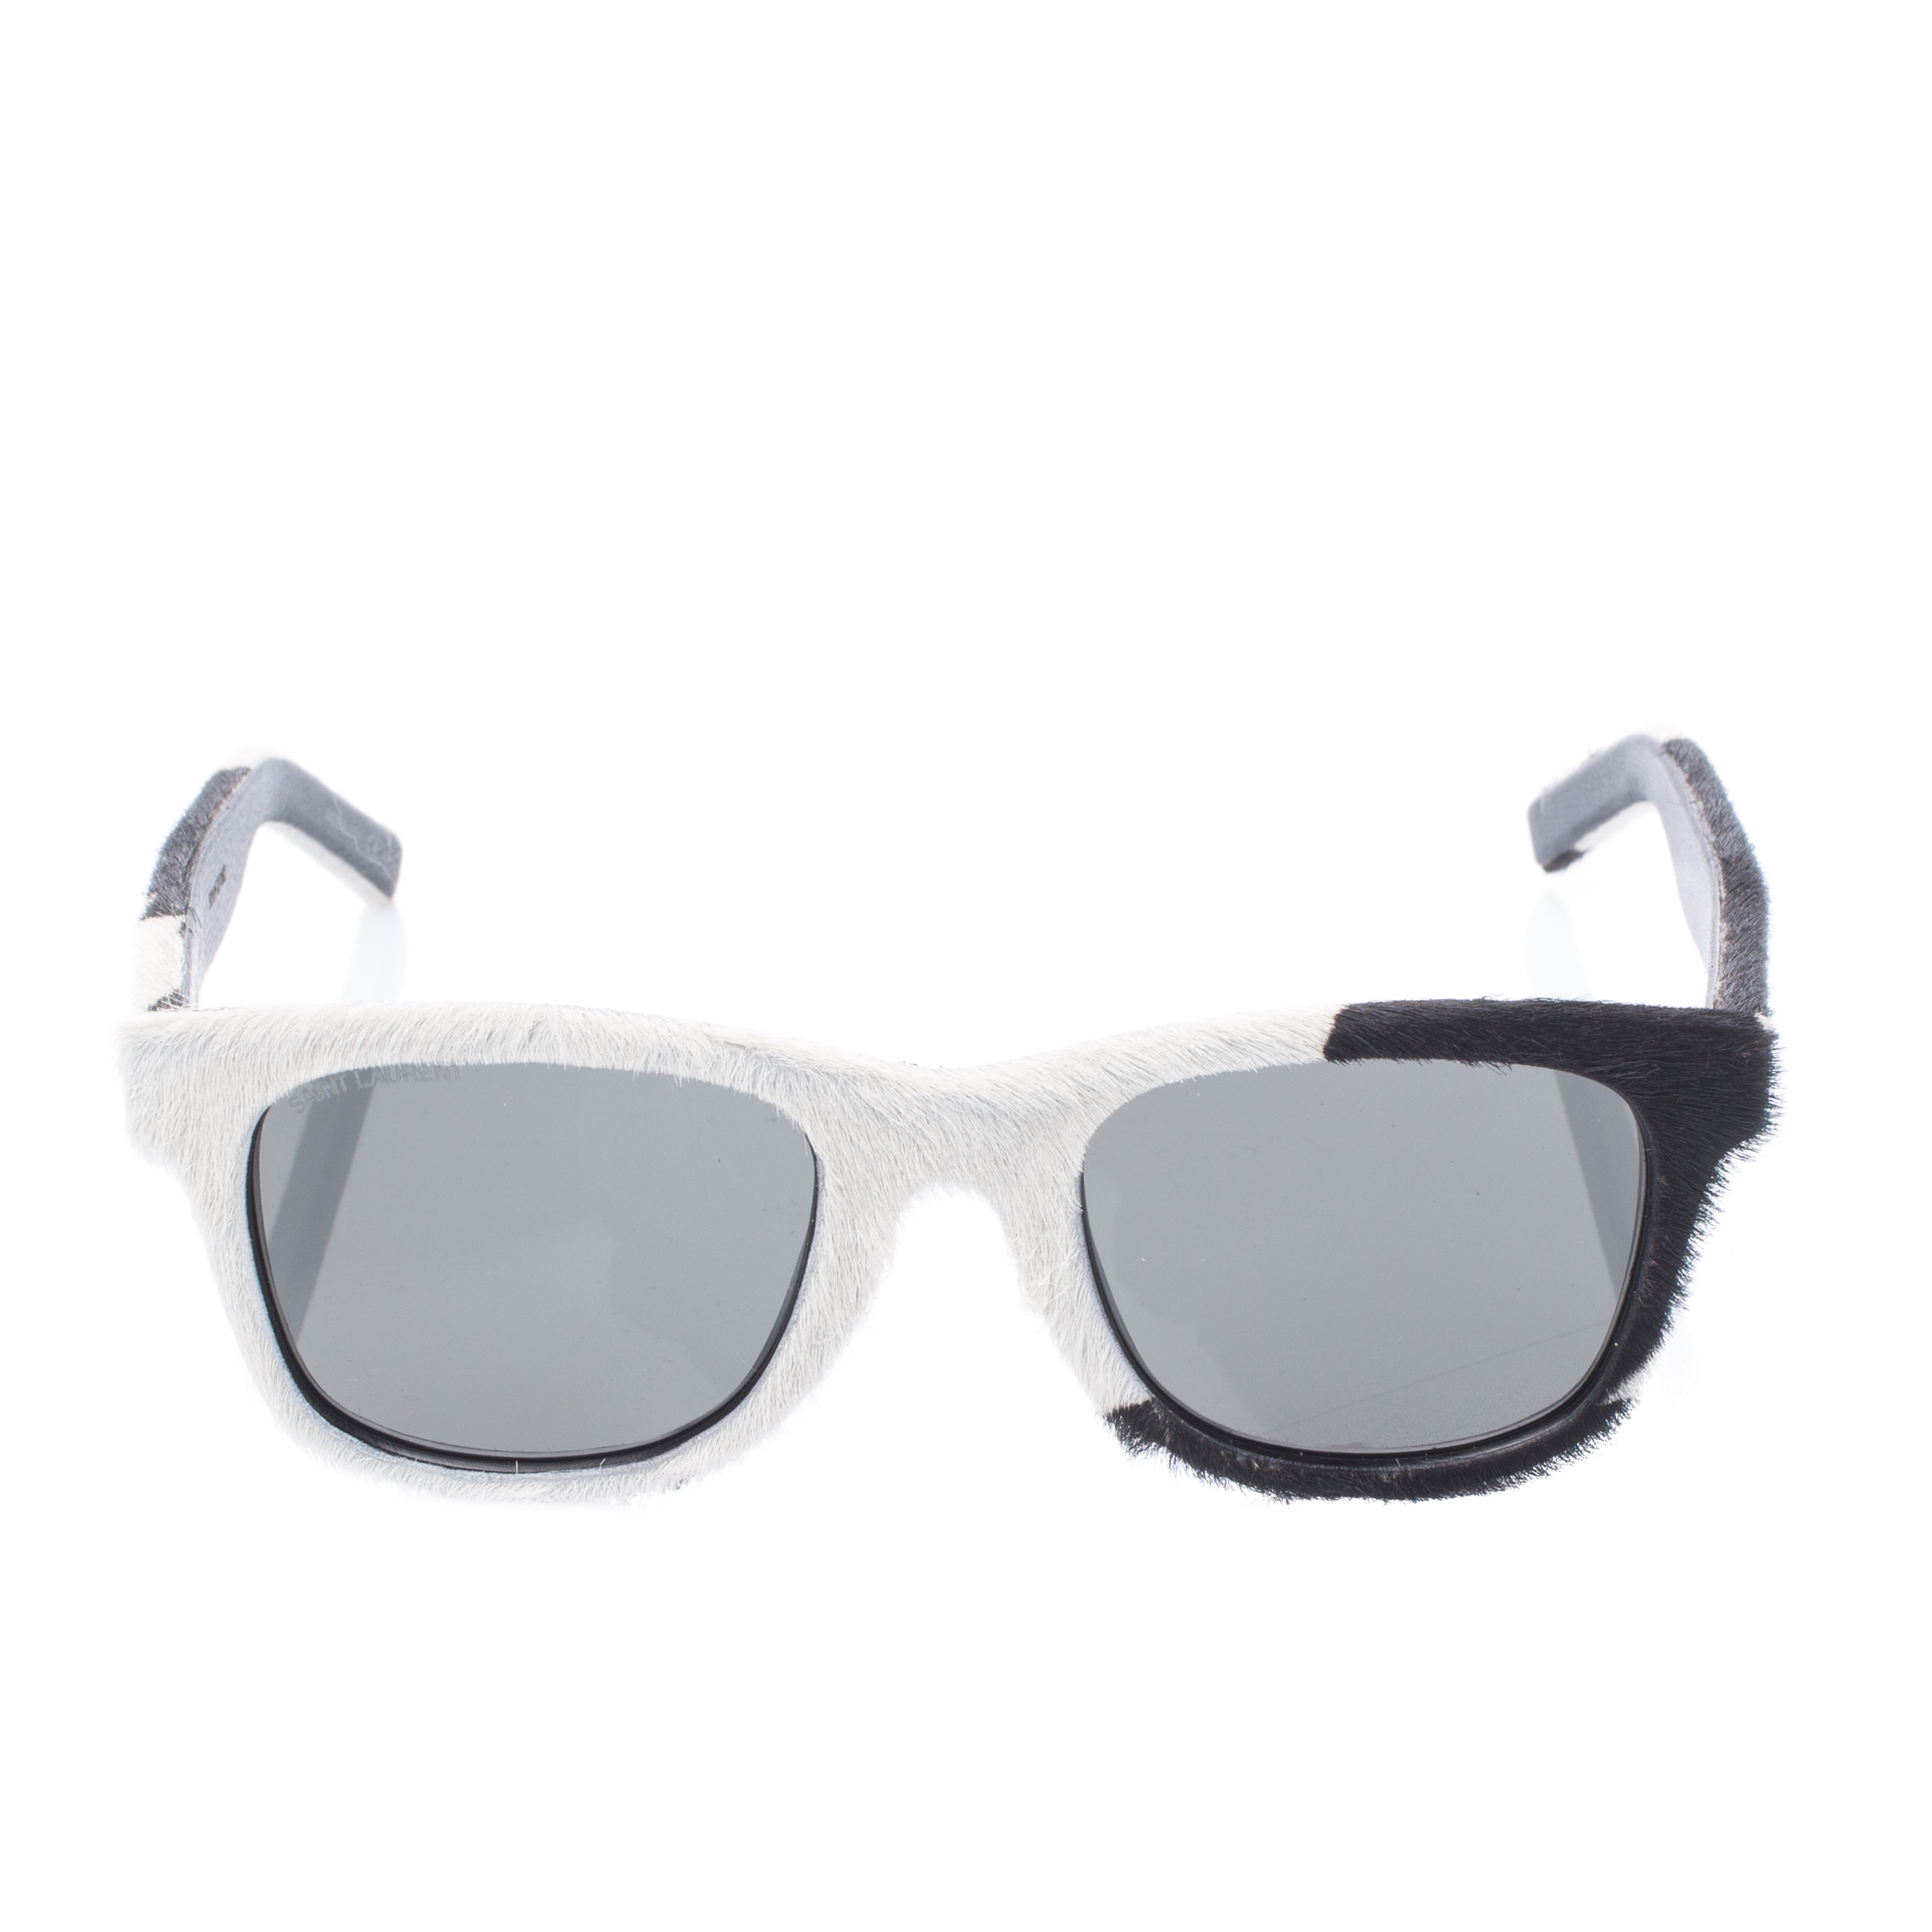 

Saint Laurent Calf Hair / Black Classic SL51 Wayfarer Sunglasses